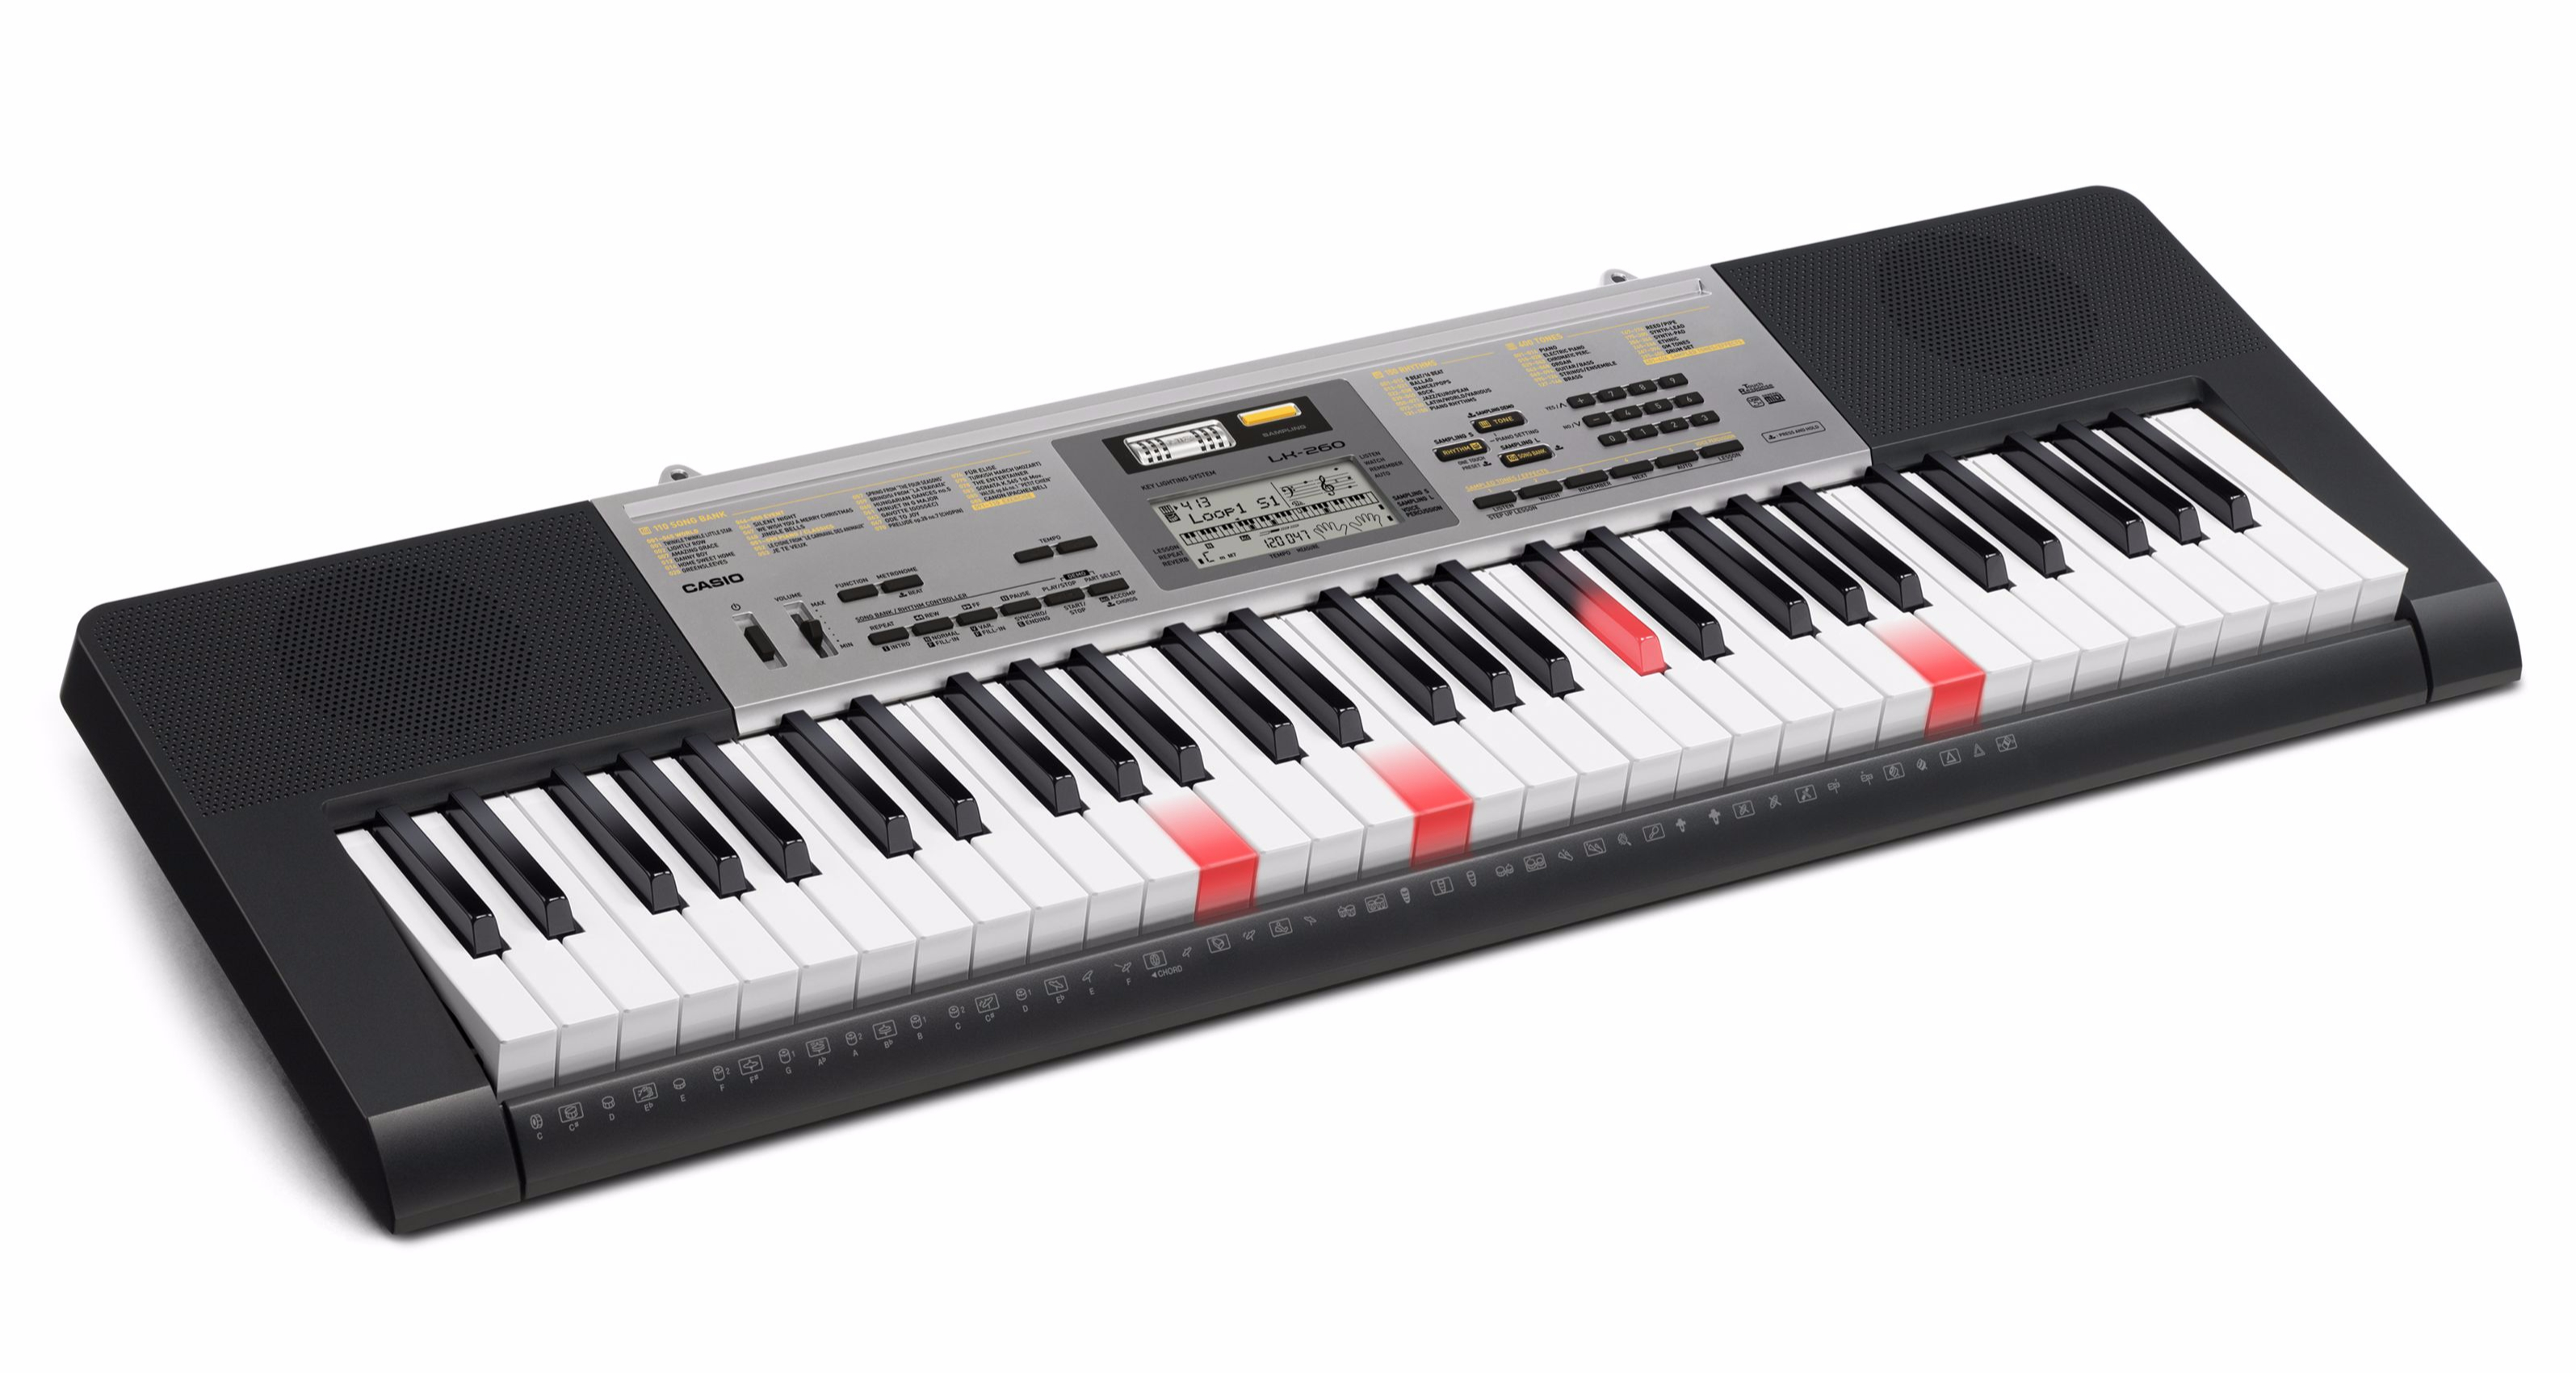 Casio LK-260 keyboard lighted keys | MUSIC STORE professional